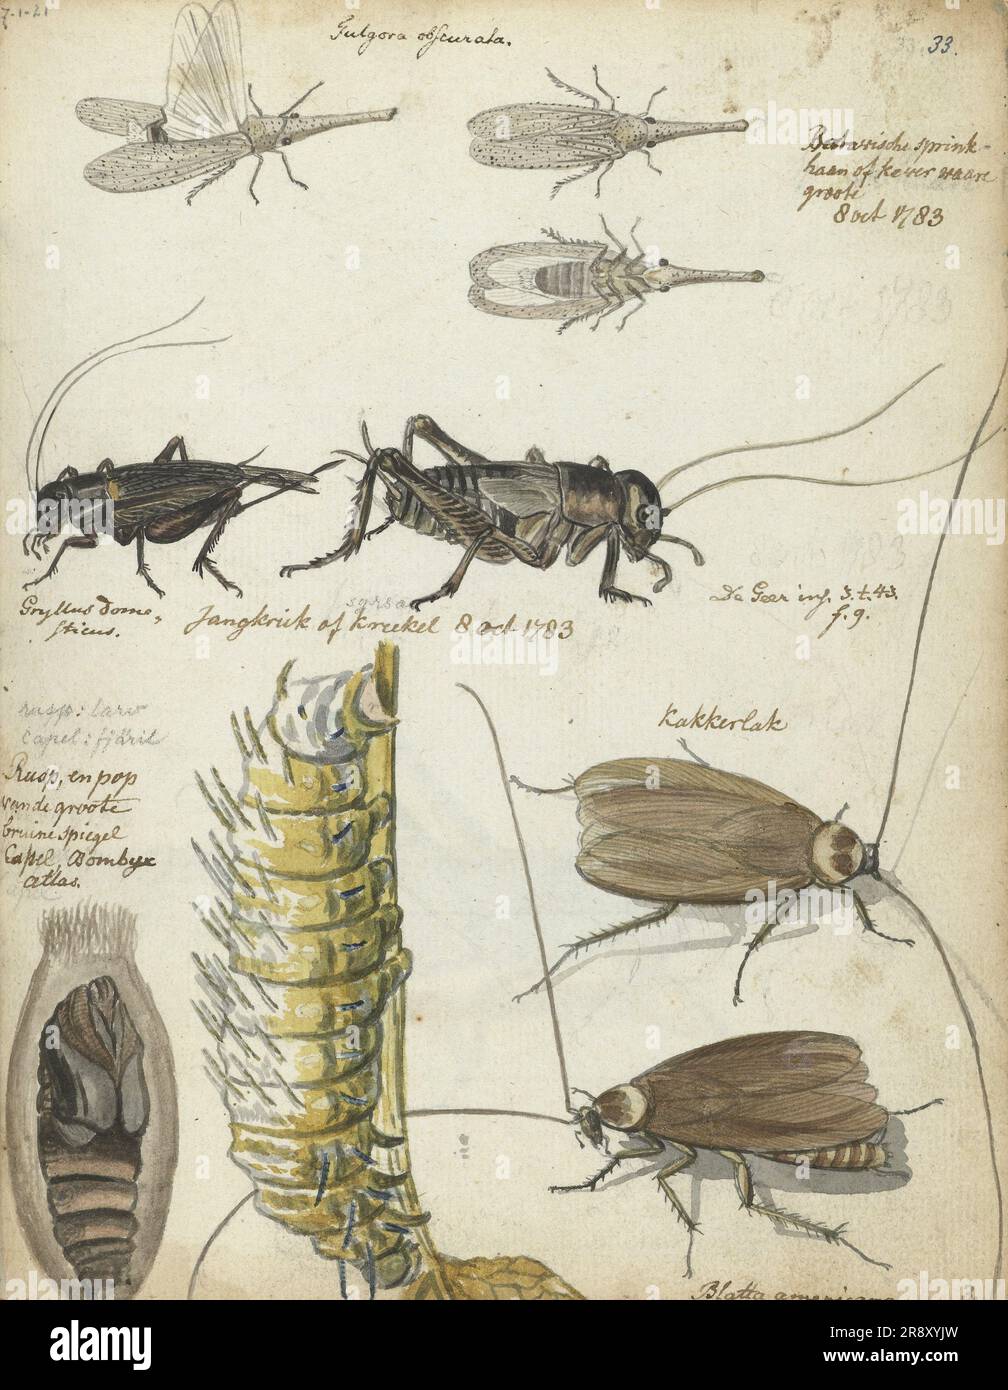 Insects, 1783. Batavian grasshopper or beetle, cricket Gryllus domesticus, caterpillar, pupae and cockroach Blatta americana. Stock Photo